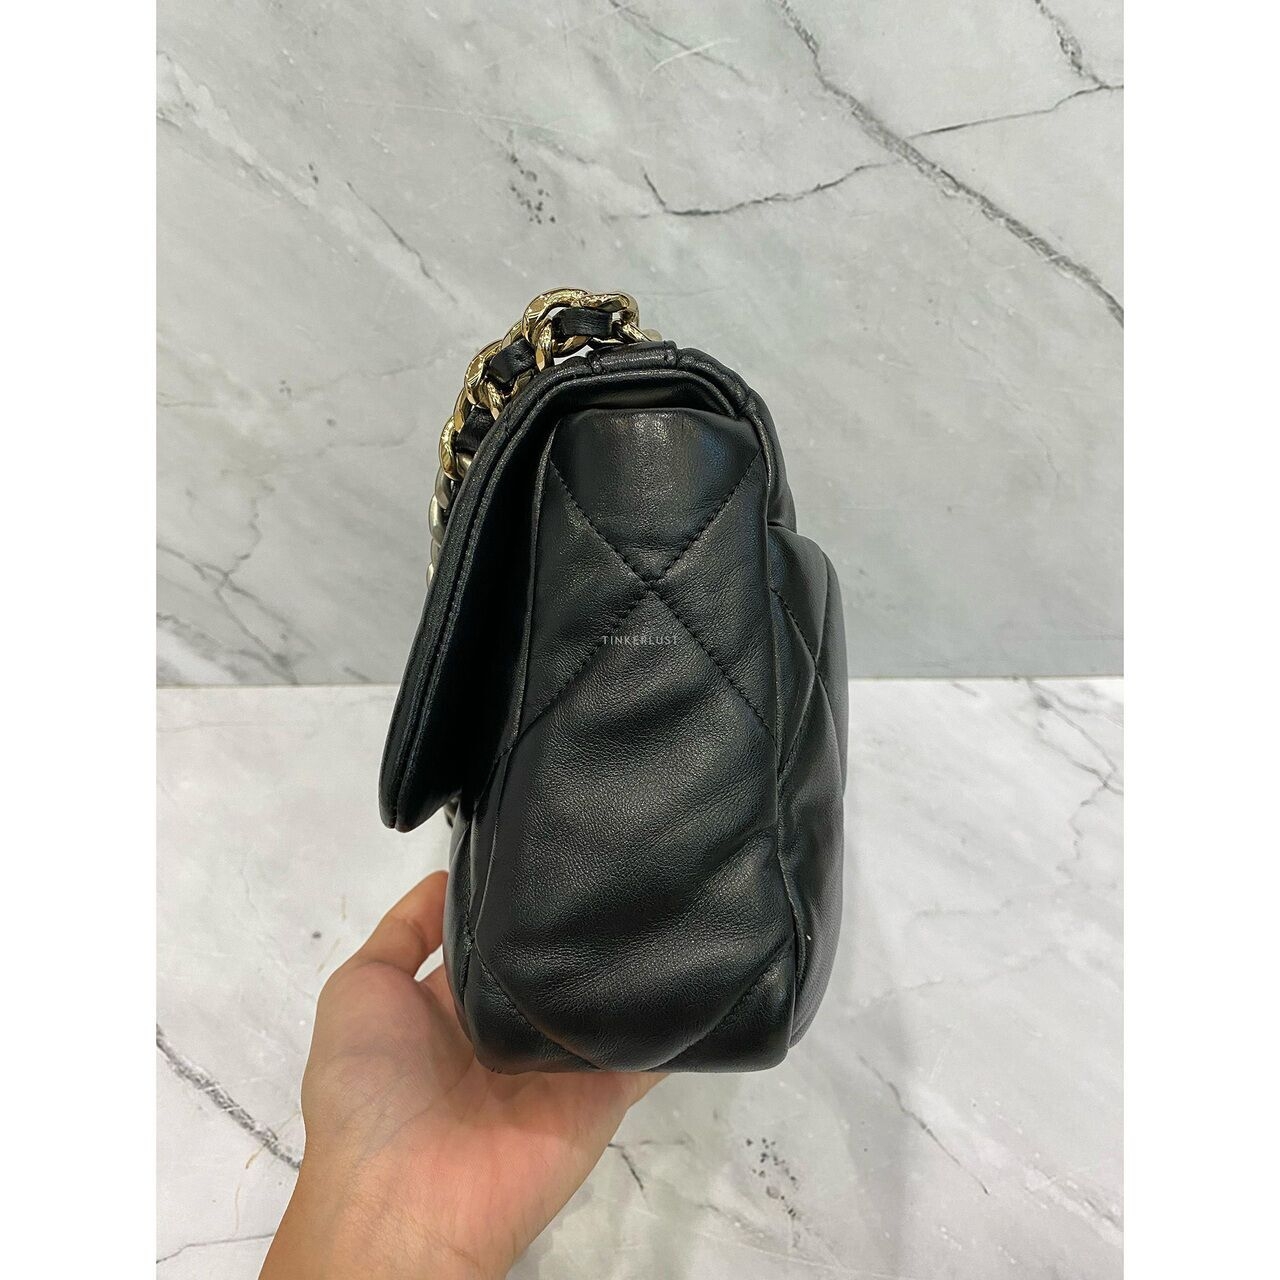 Chanel C19 Black Small SHW Chip Sling Bag